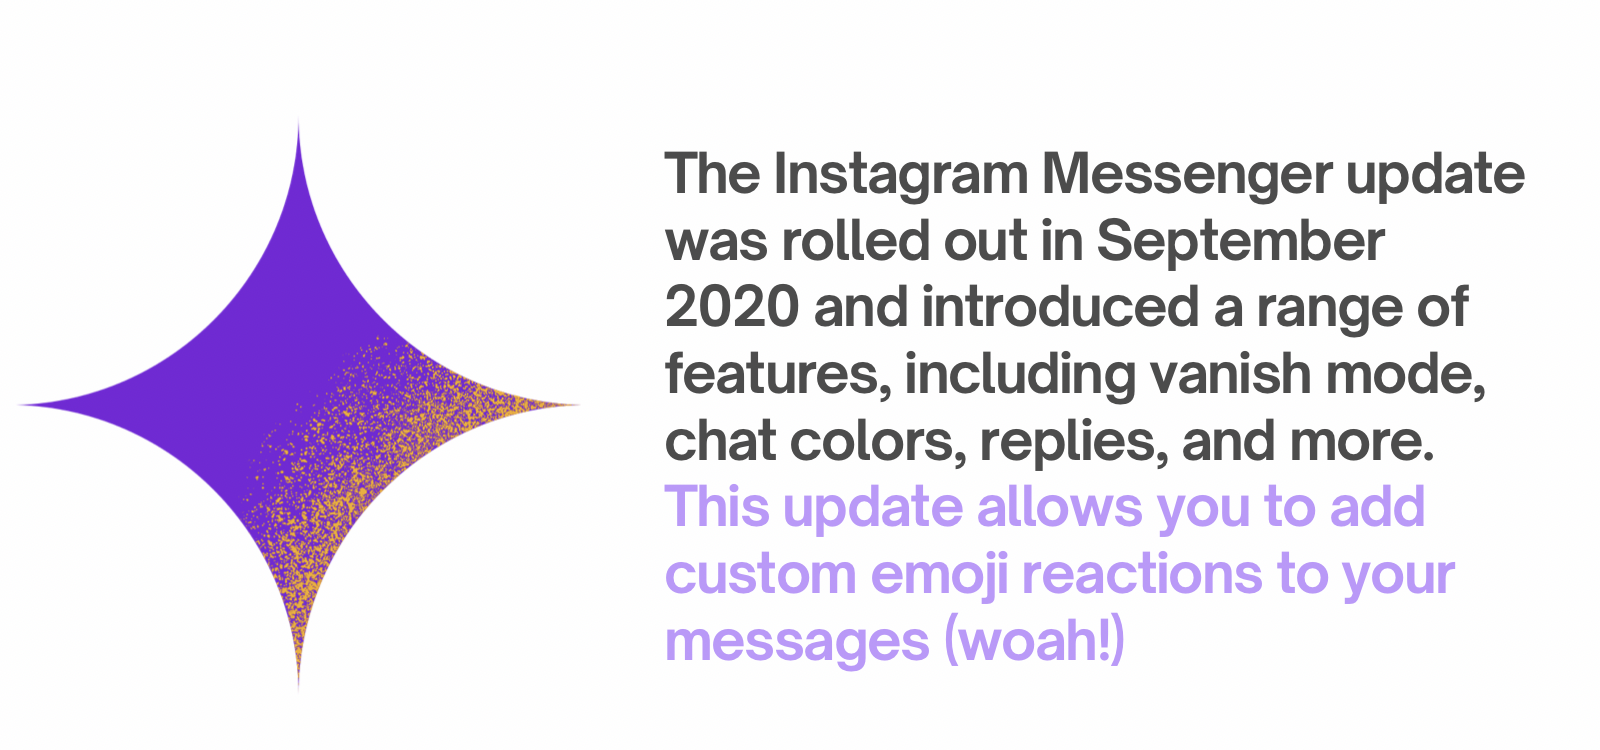 Update messenger not showing instagram